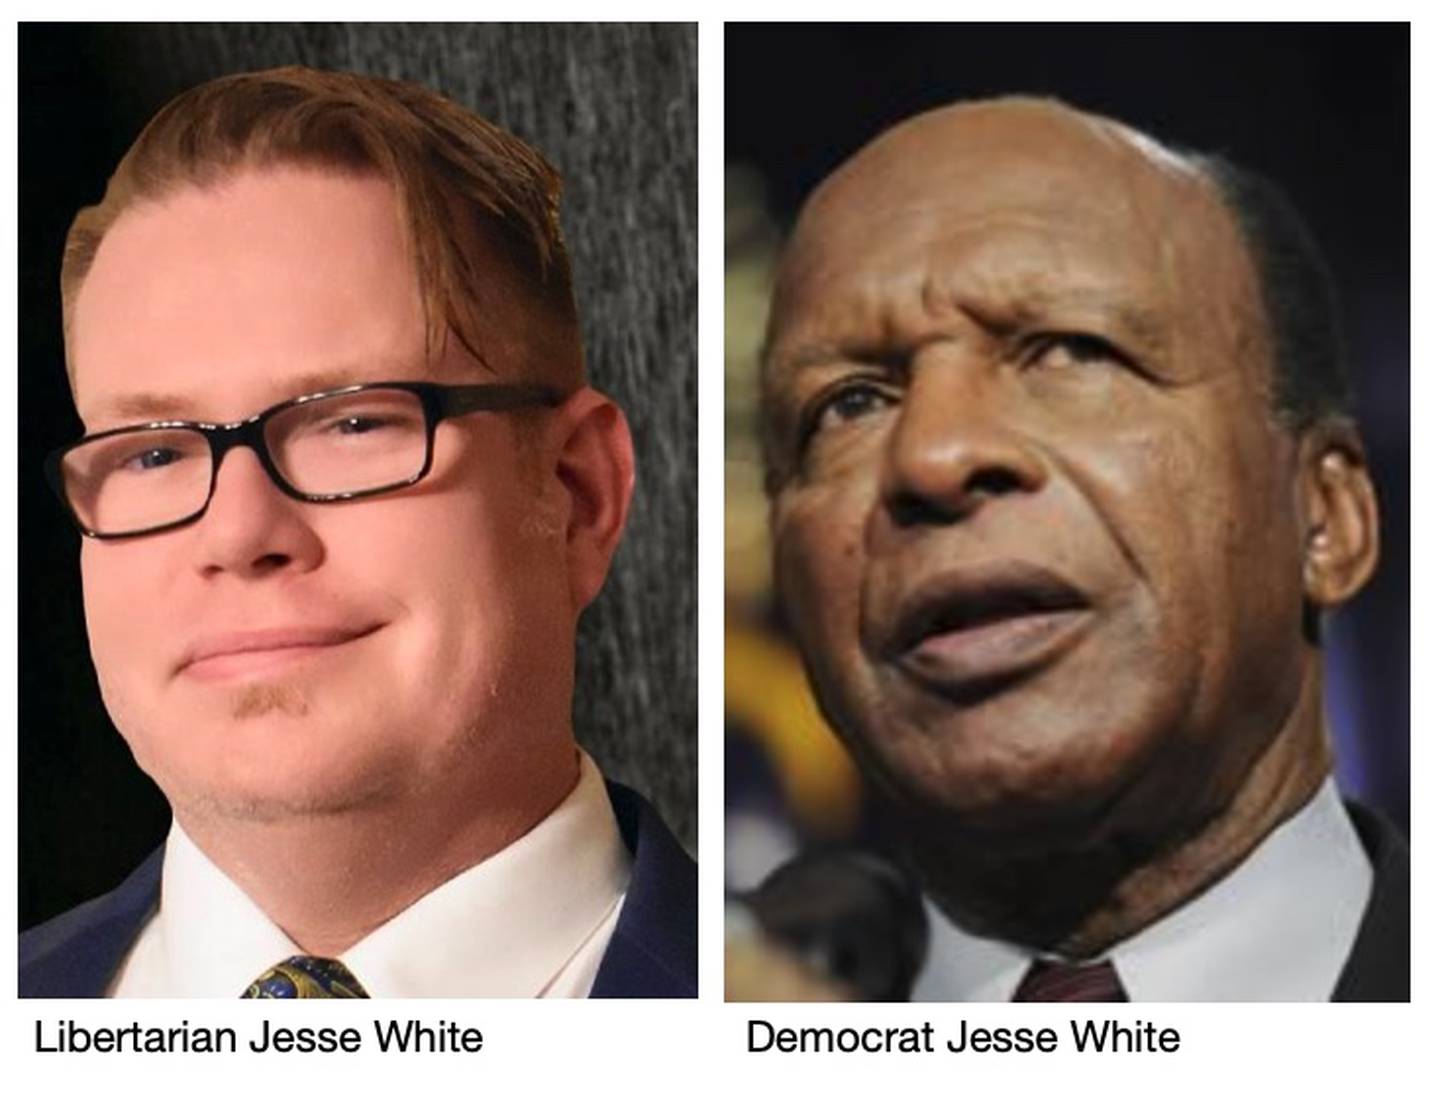 Photos of Libertarian Jesse White and Democrat Jesse White.